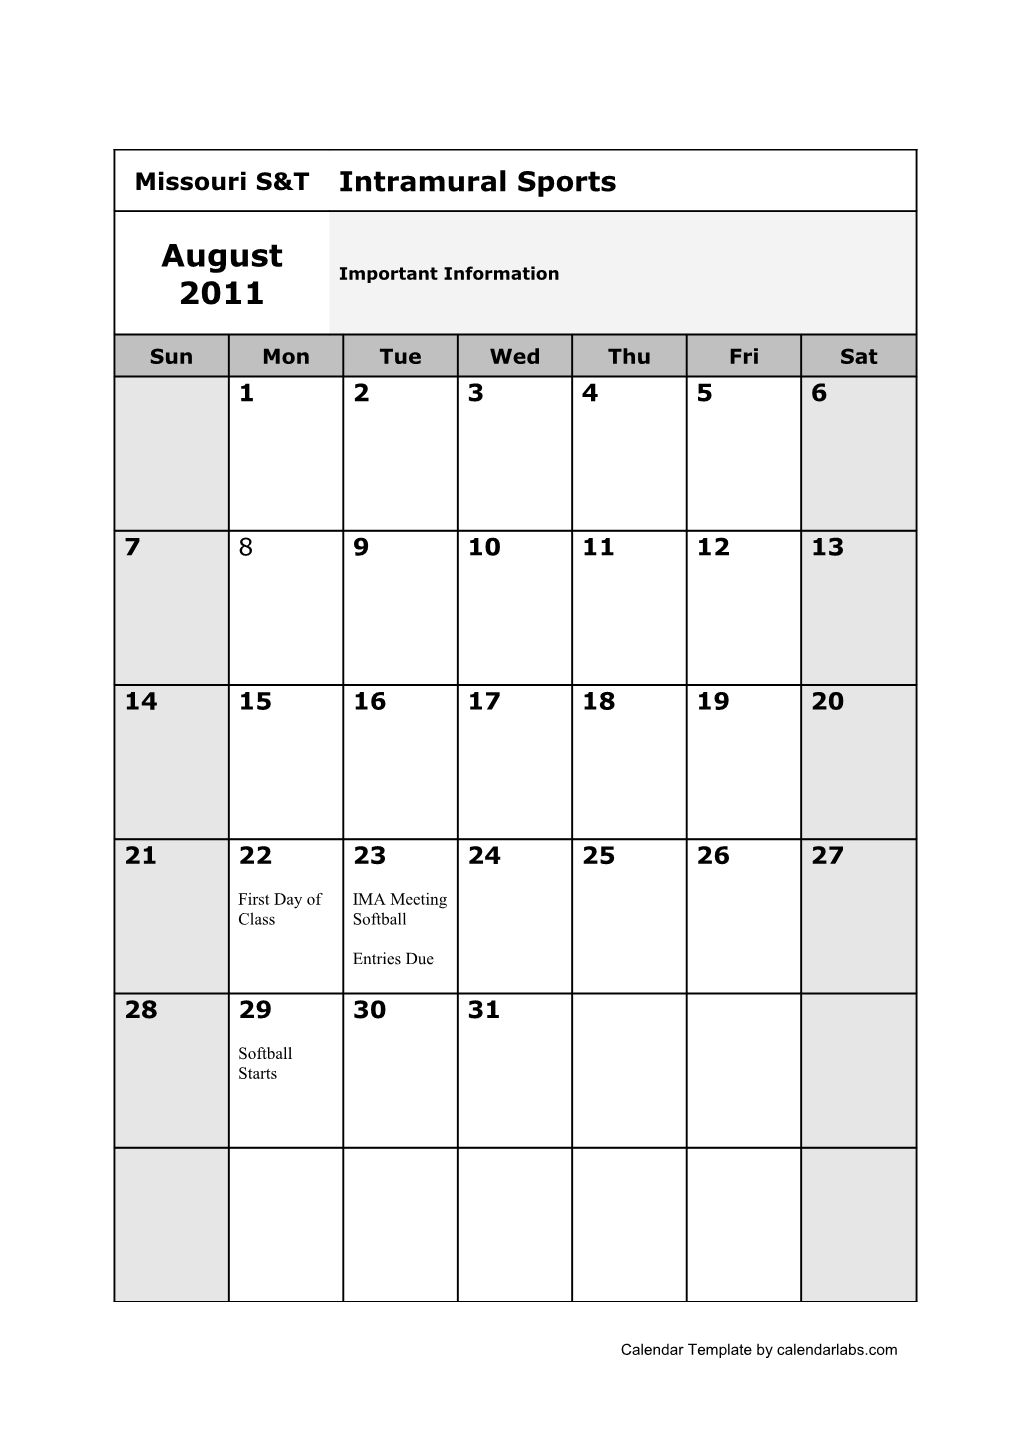 Calendar Template by Calendarlabs.Com